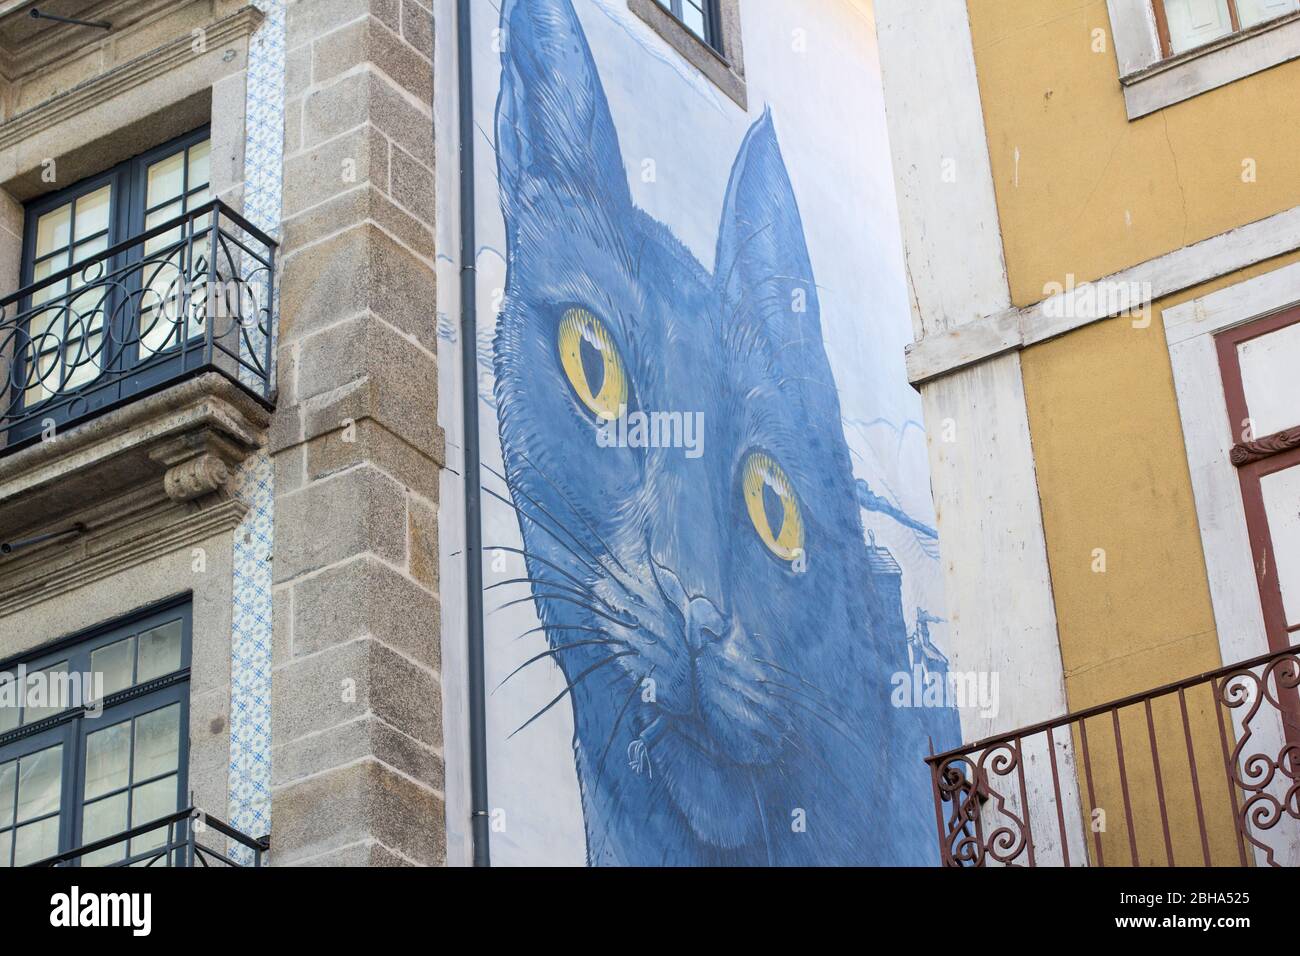 Mural, blue cat between houses Stock Photo